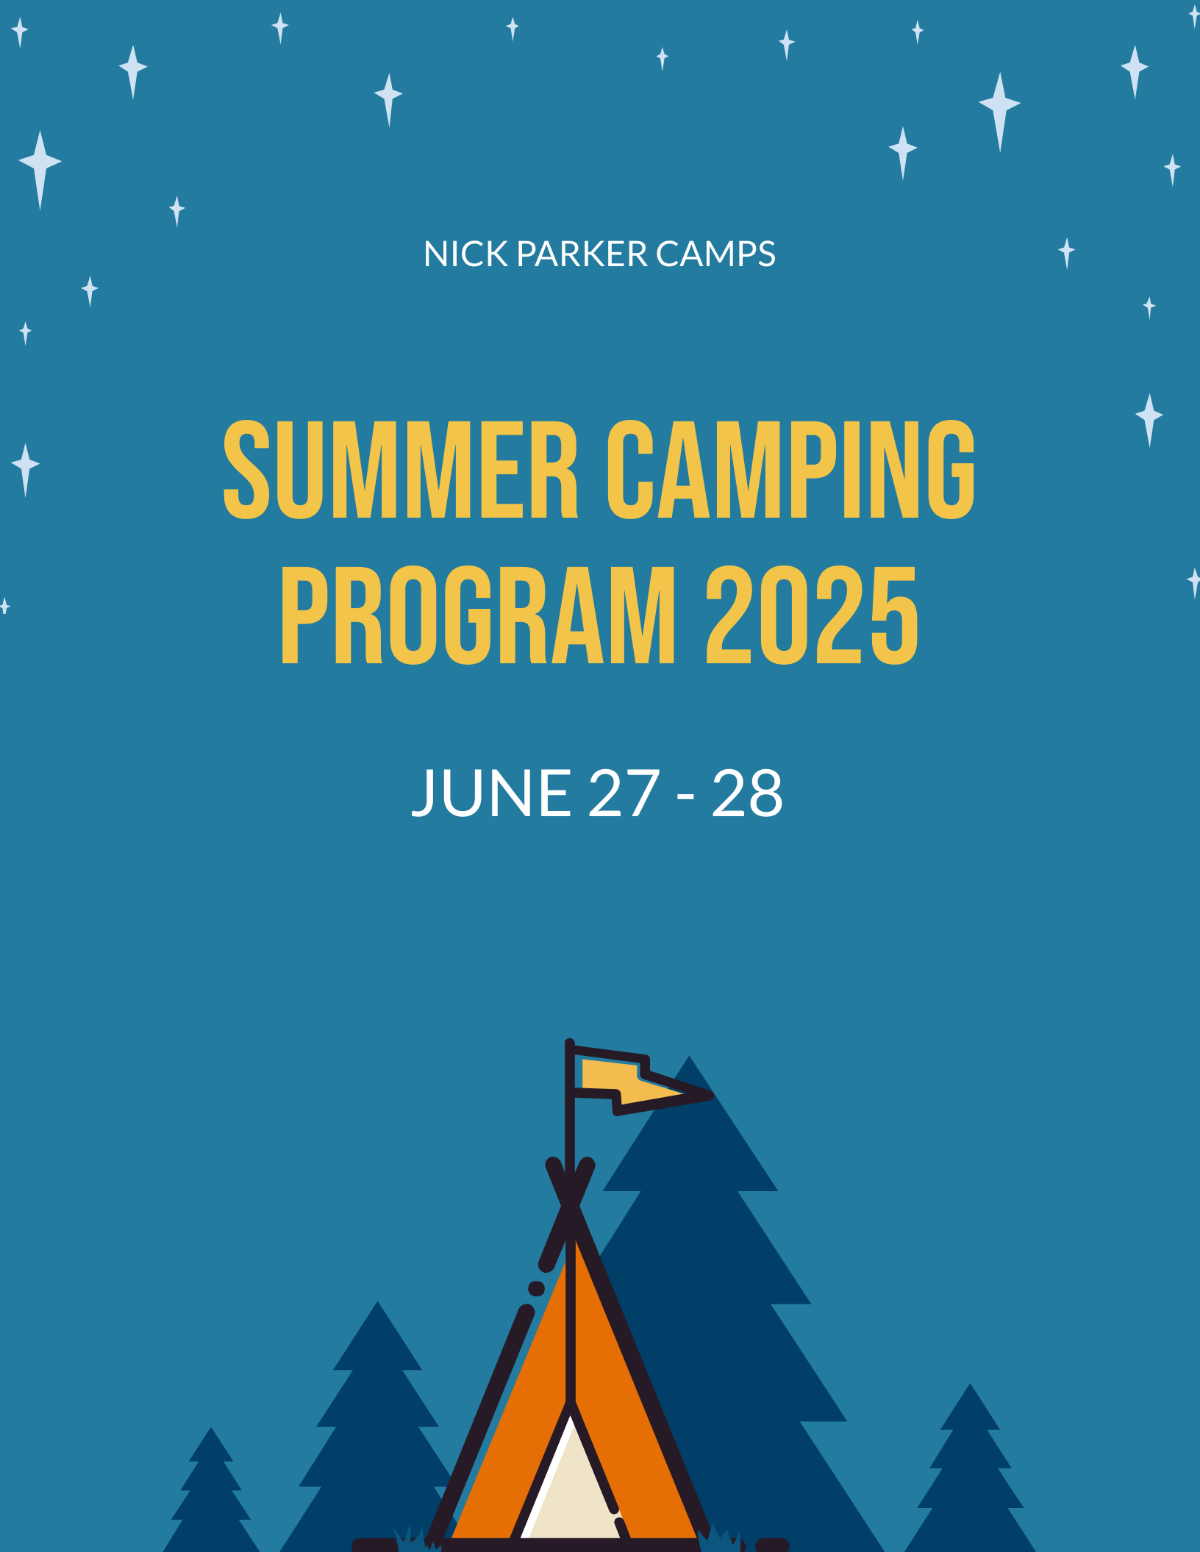 Camping Program Flyer Template